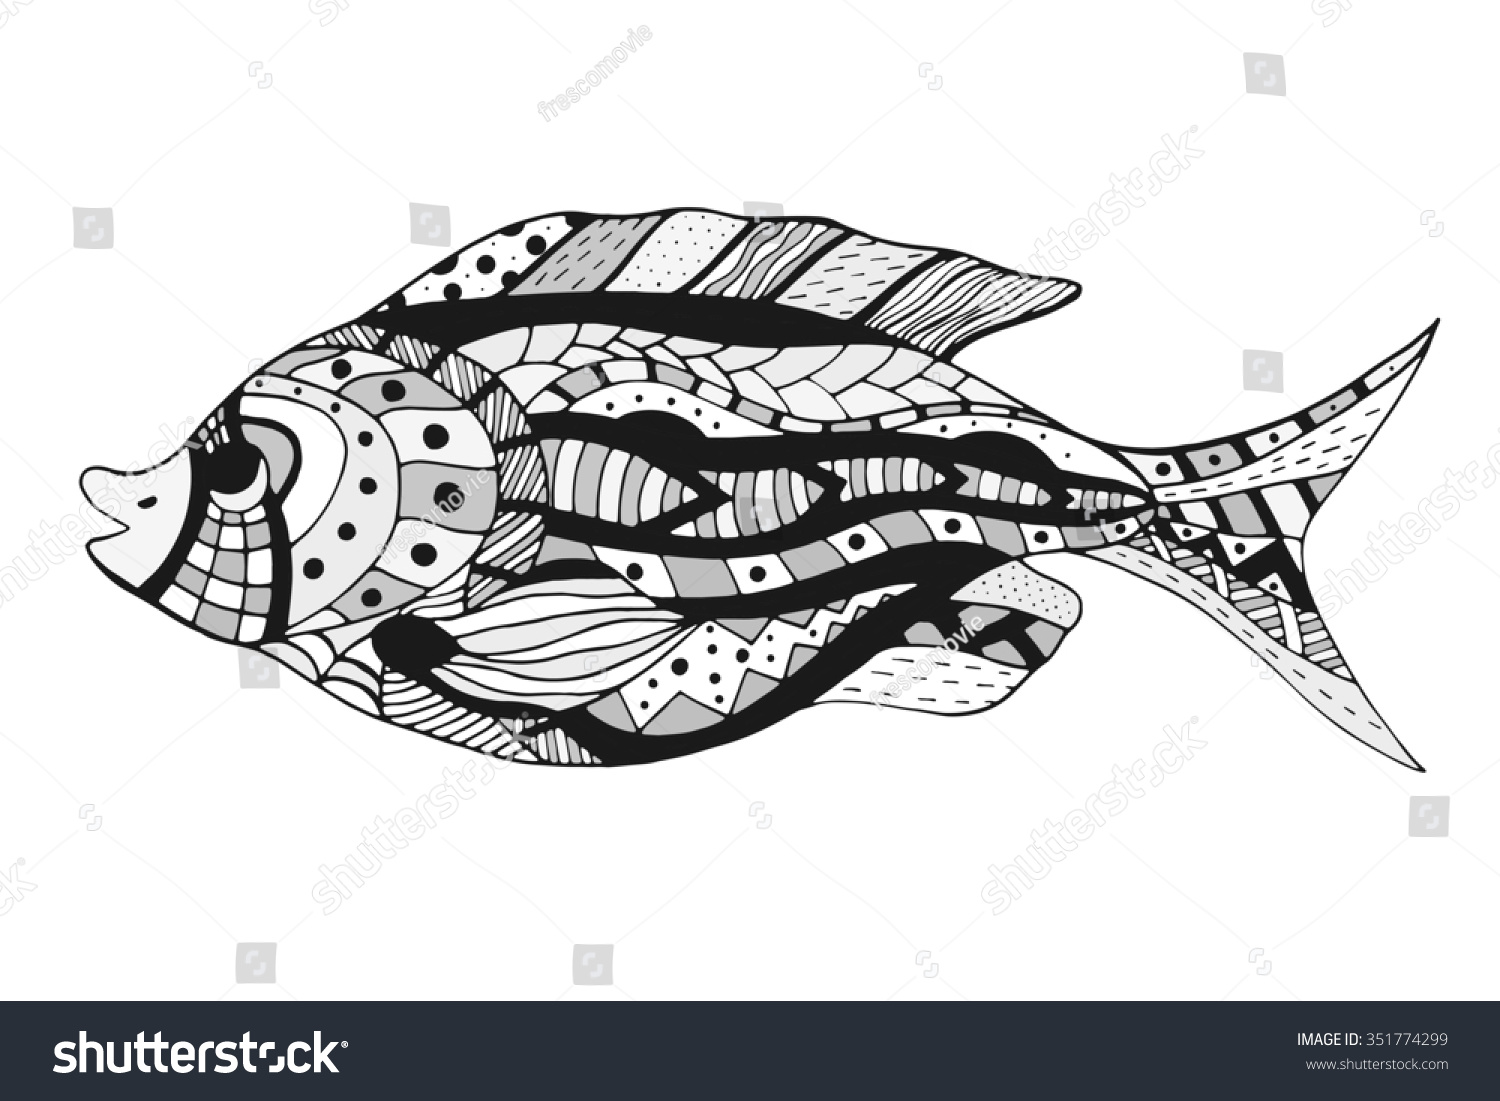 Royalty Free Monochrome Zentangle Stylized Fish 351774299 Stock